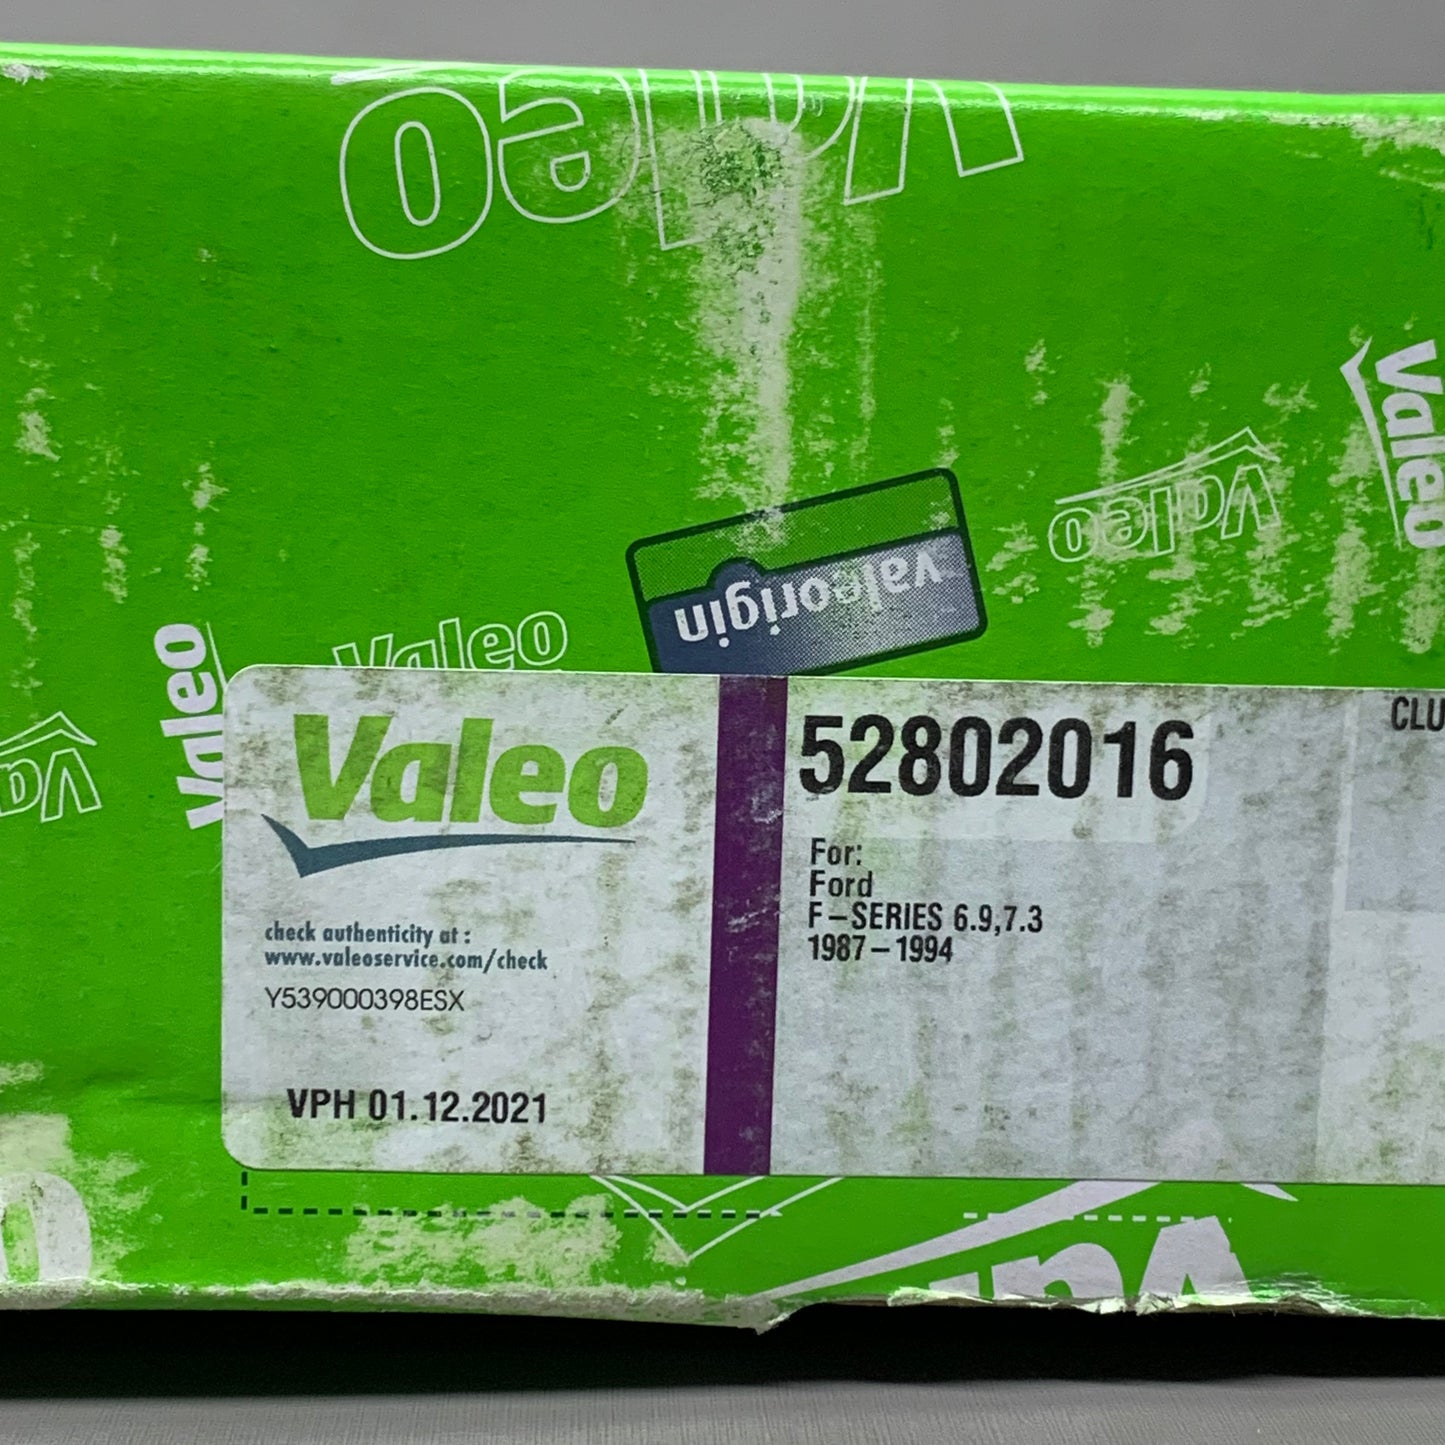 VALEO Transmission Clutch Kit for 1987-1994 Ford F Series 52802016 (New)